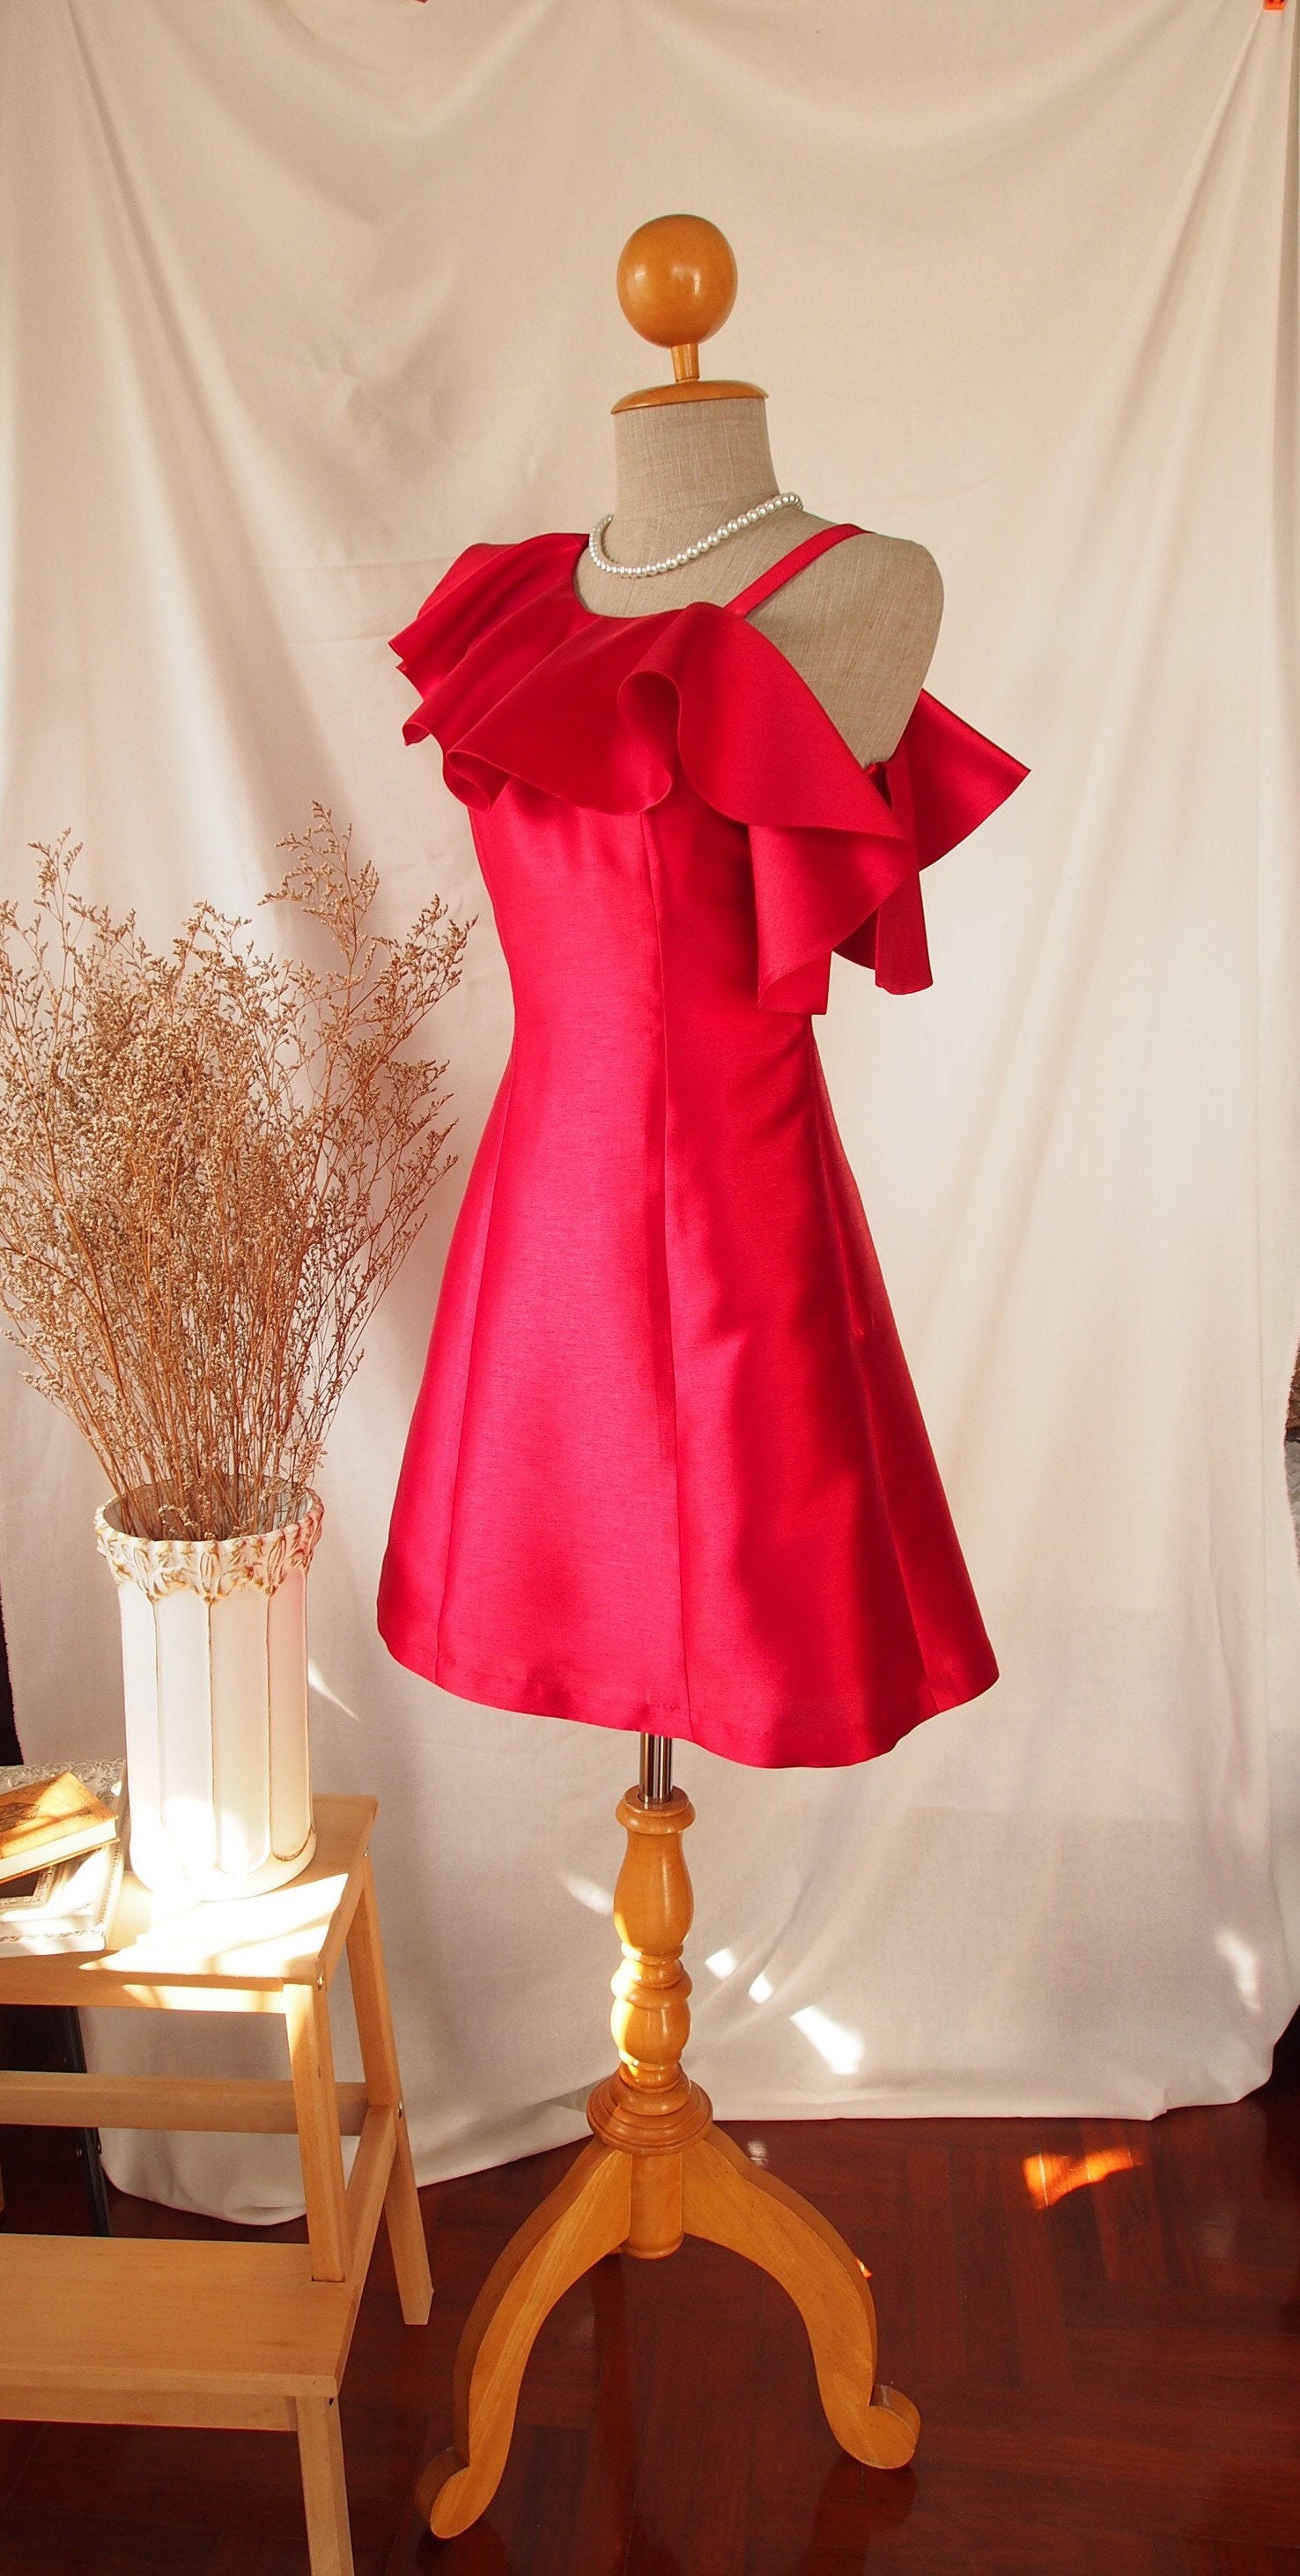 Emma - Red Prom Dress One Shoulder Party Shining Silk Big Ruffle A Line Shape Bridesmaid Wedding Date Night Formal Elegant Dress